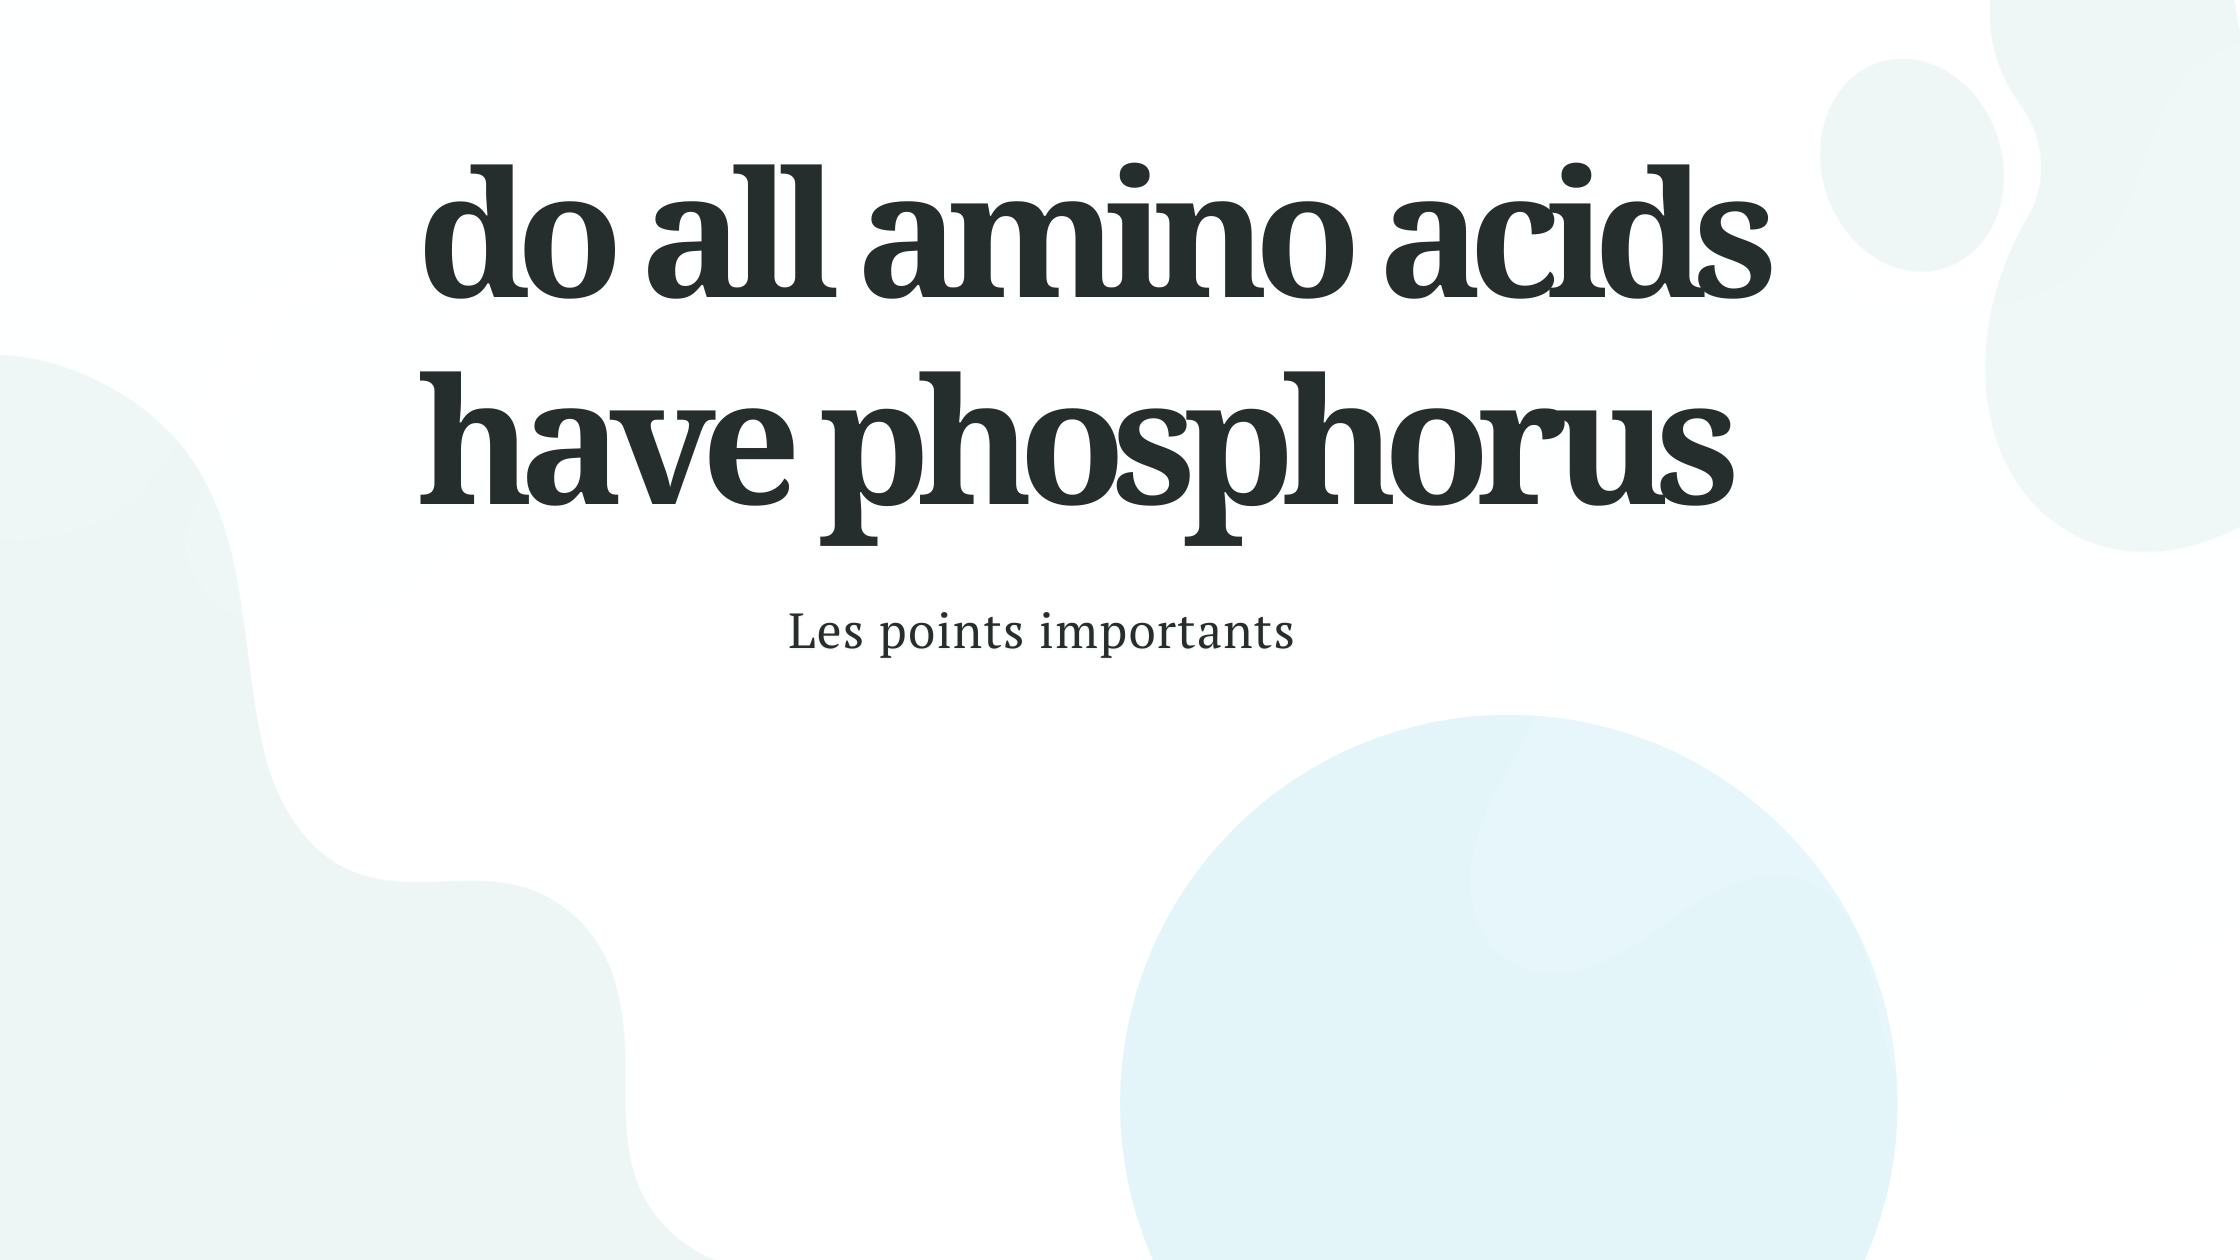 do all amino acids have phosphorus | Les points importants